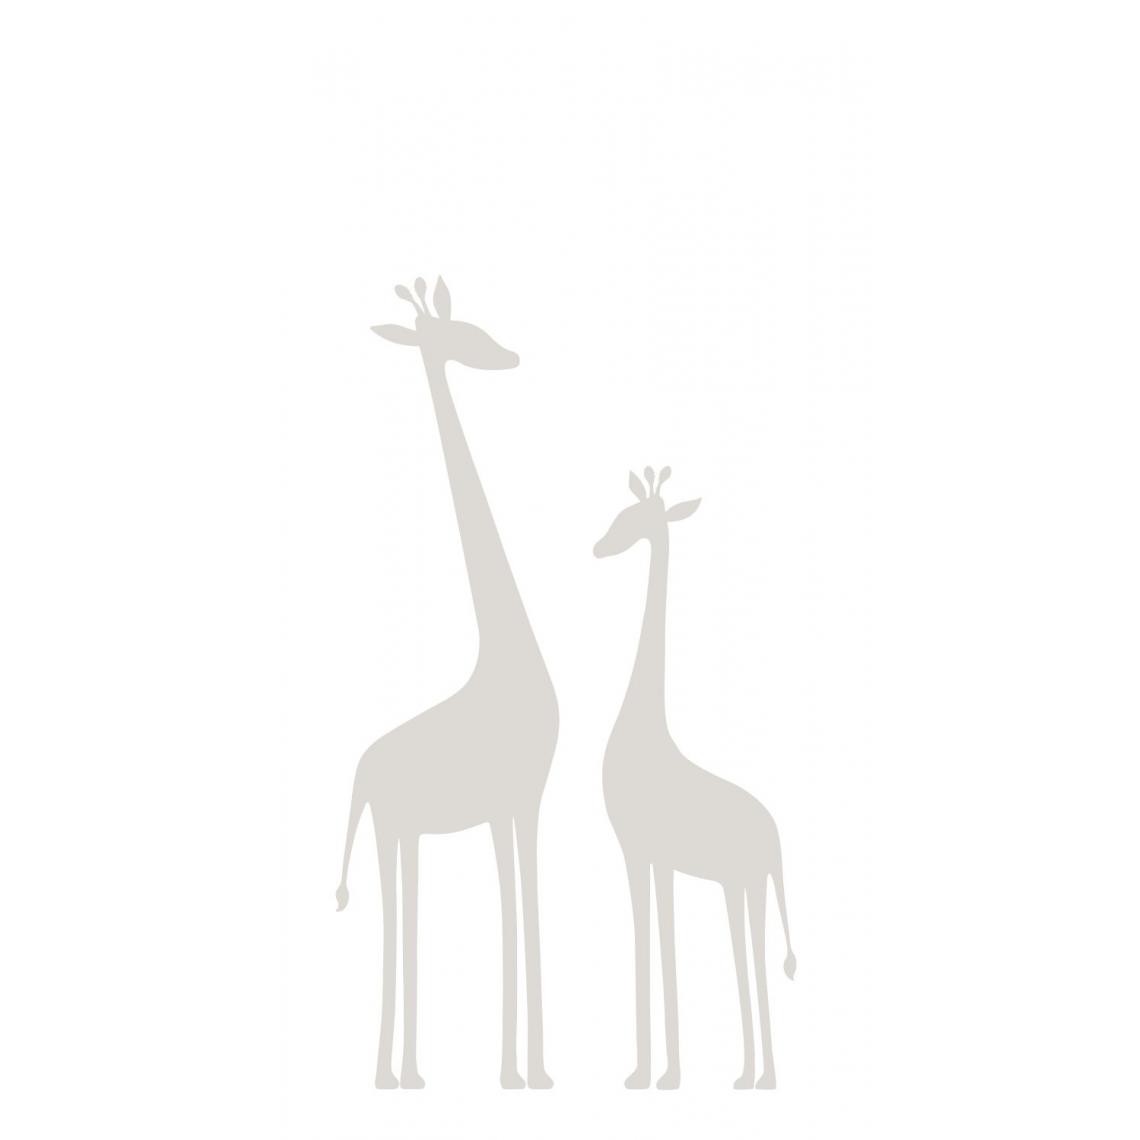 Origin - Origin papier peint panoramique girafes gris chaud - 357219 - 1.5 x 2.79 m - Papier peint